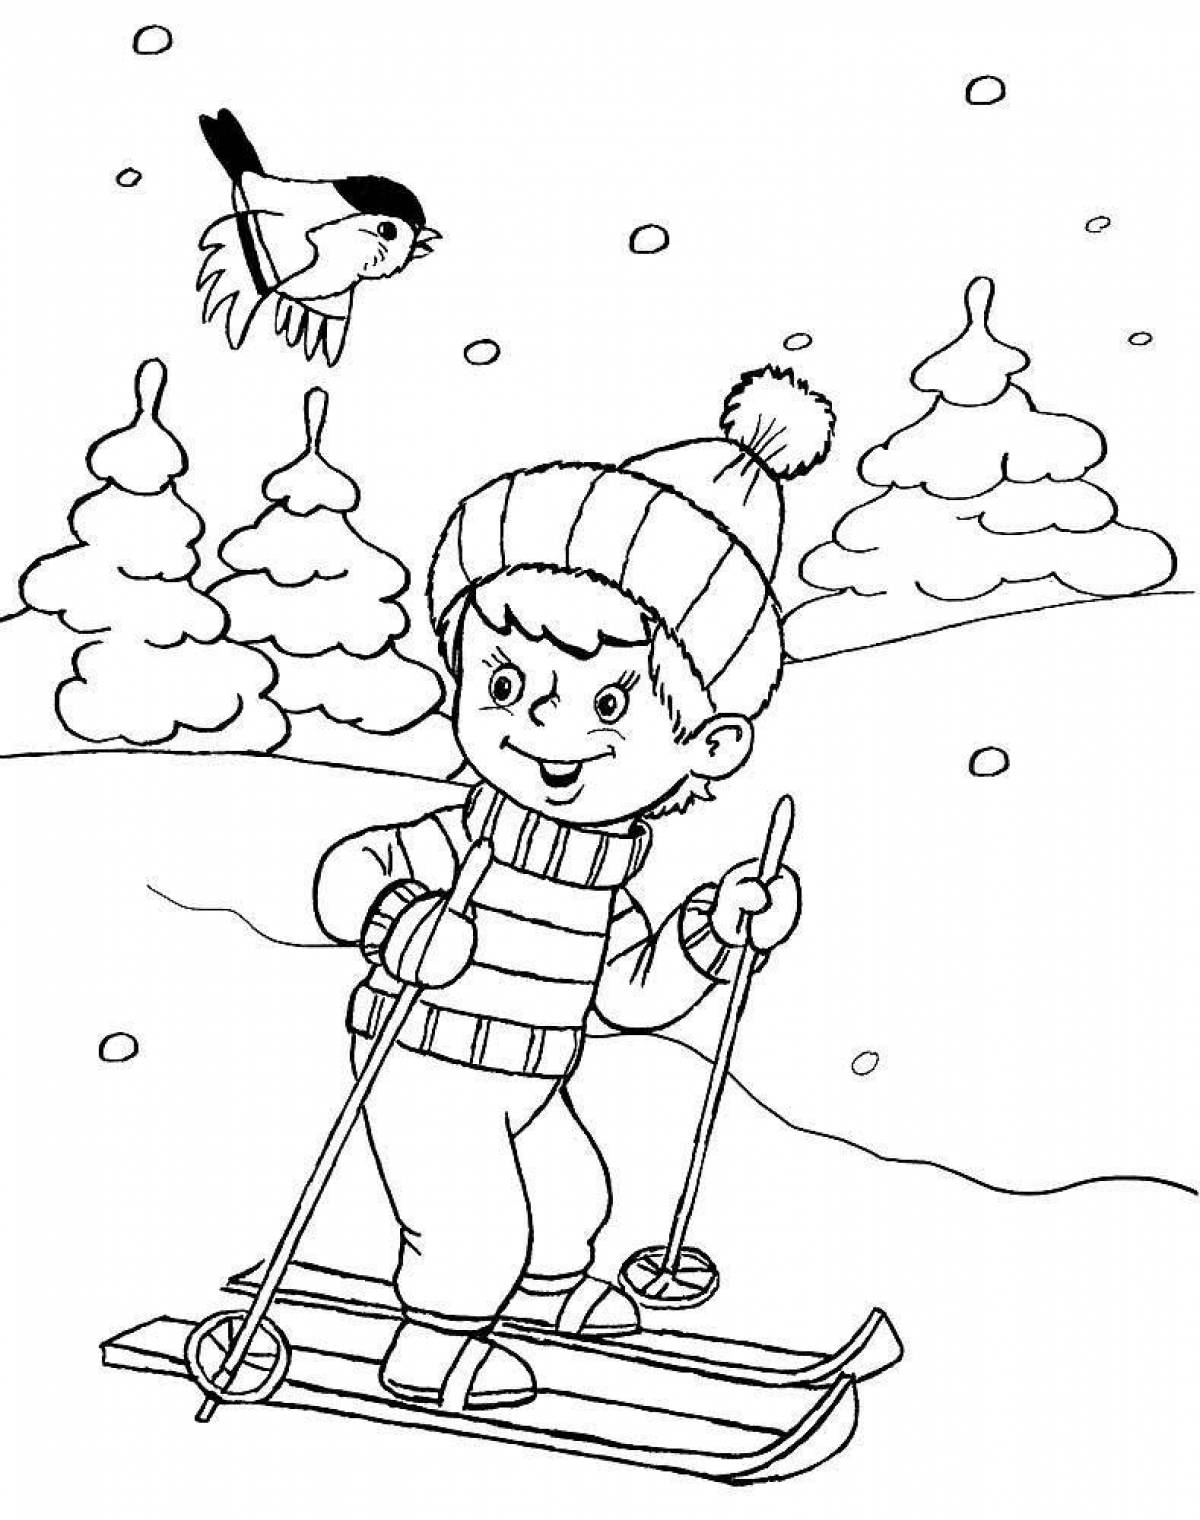 Fun skier coloring page